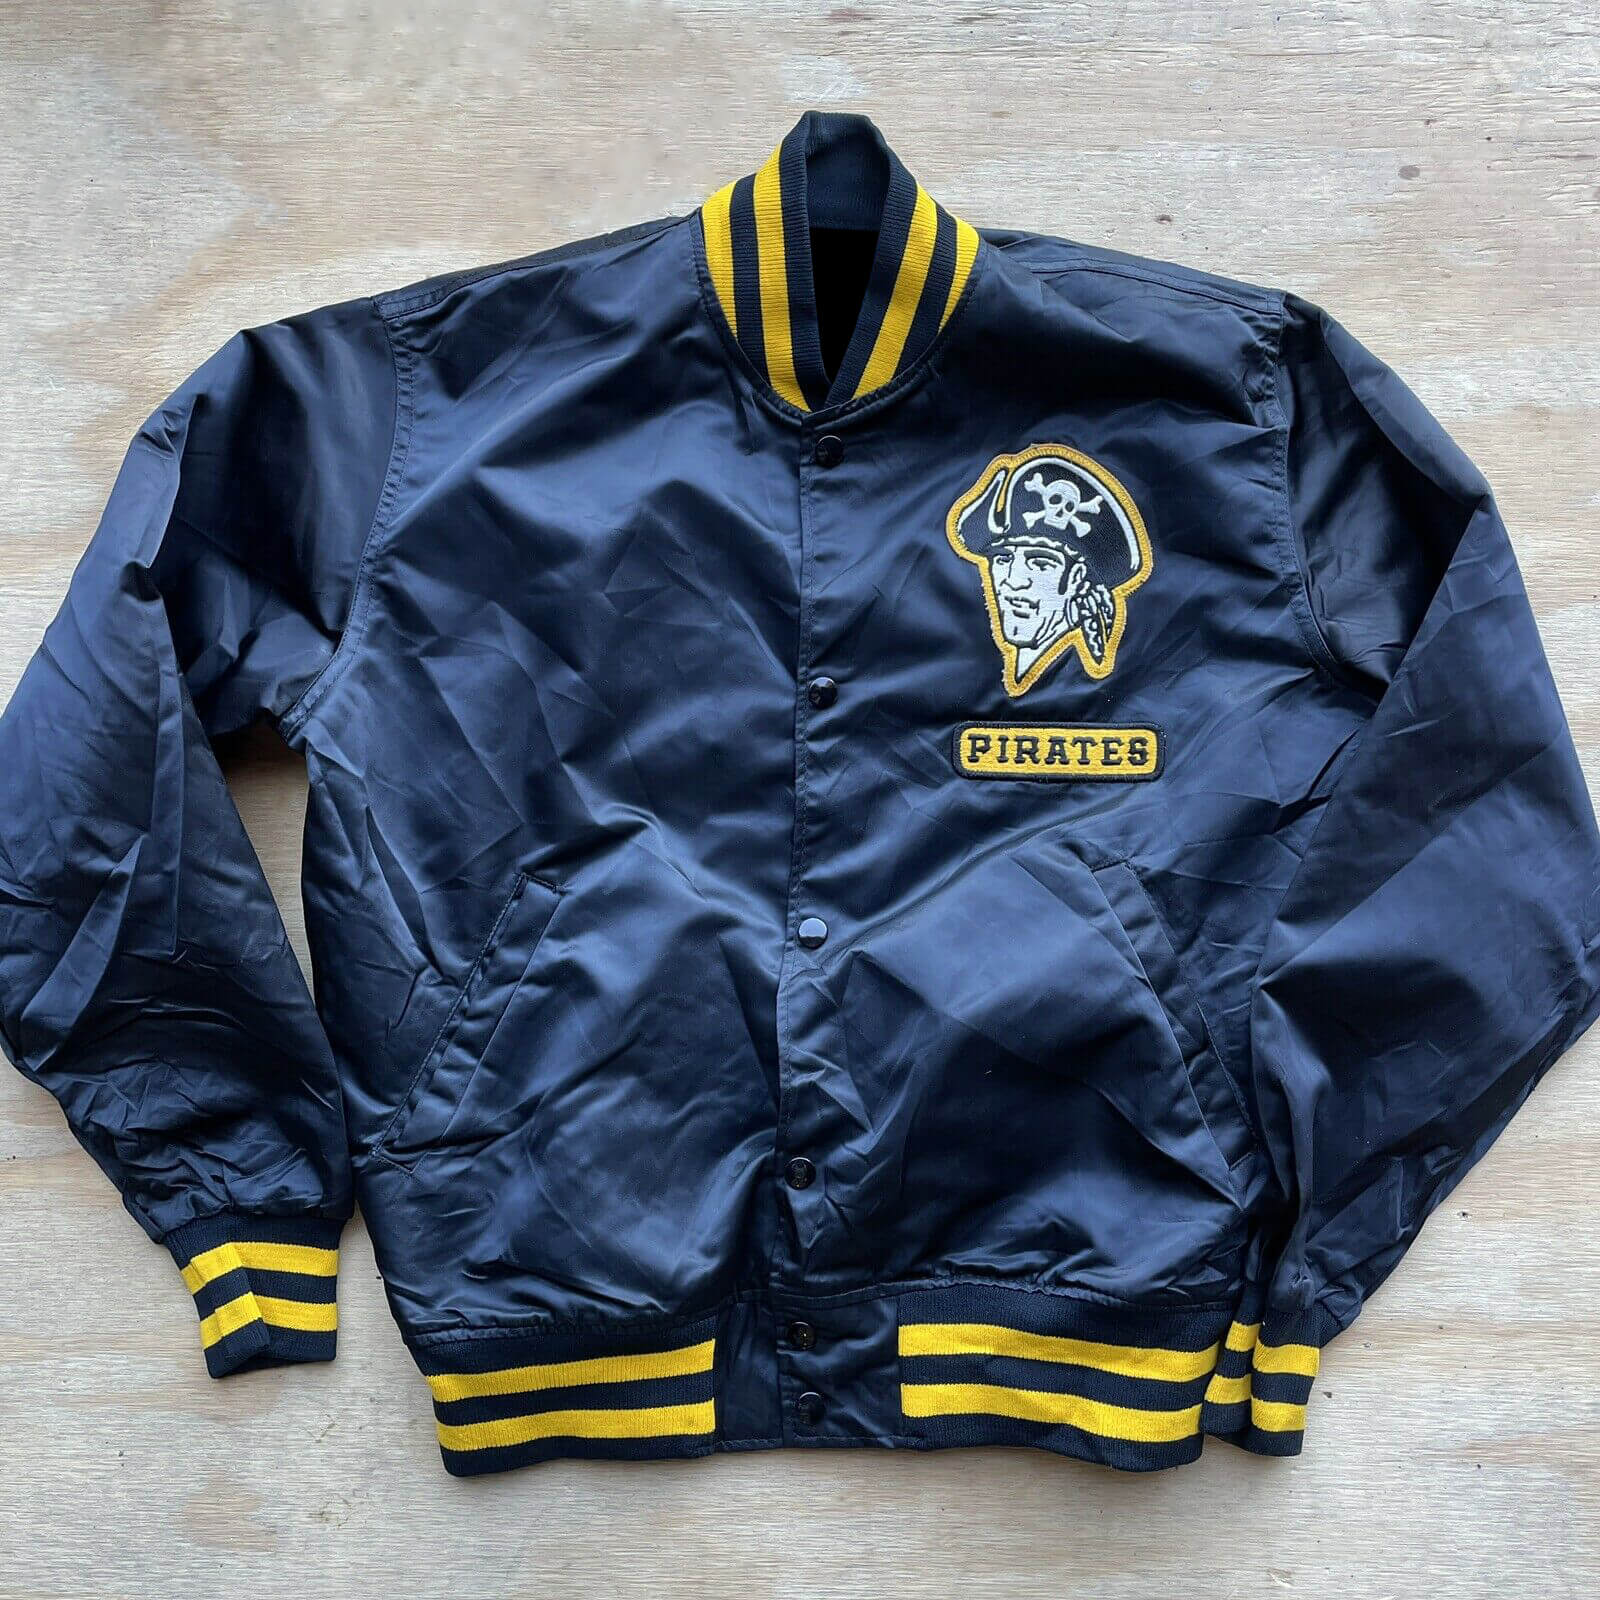 Vintage Pittsburgh Pirates Blue Satin Jacket - Maker of Jacket